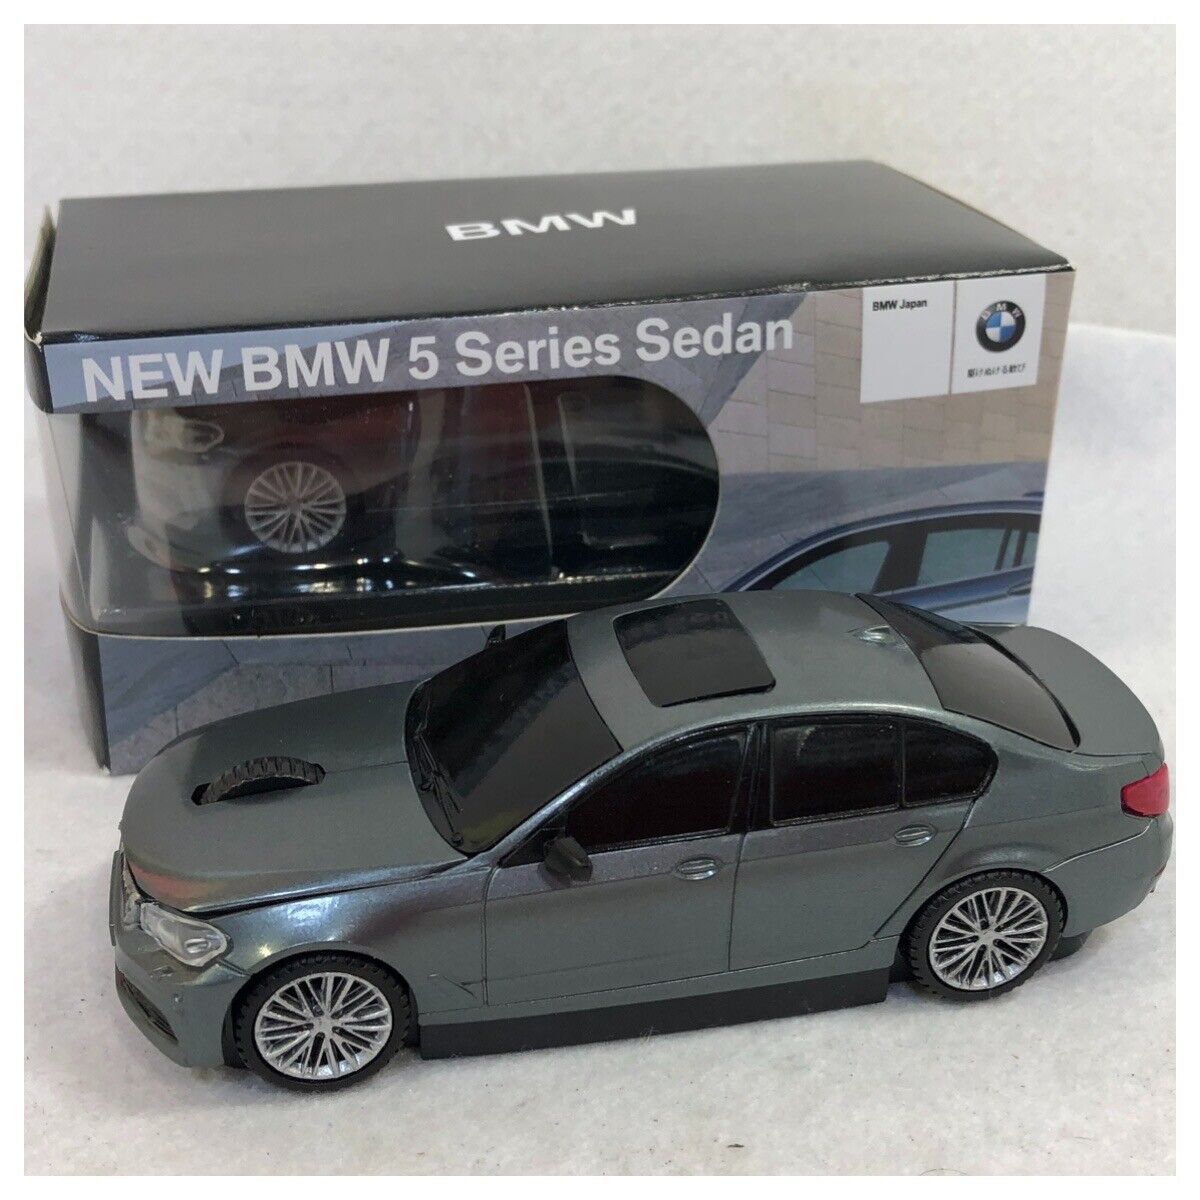 BMW New 5 Series Sedan Gray Wireless Computer Mouse Mini car model Dealer Promo